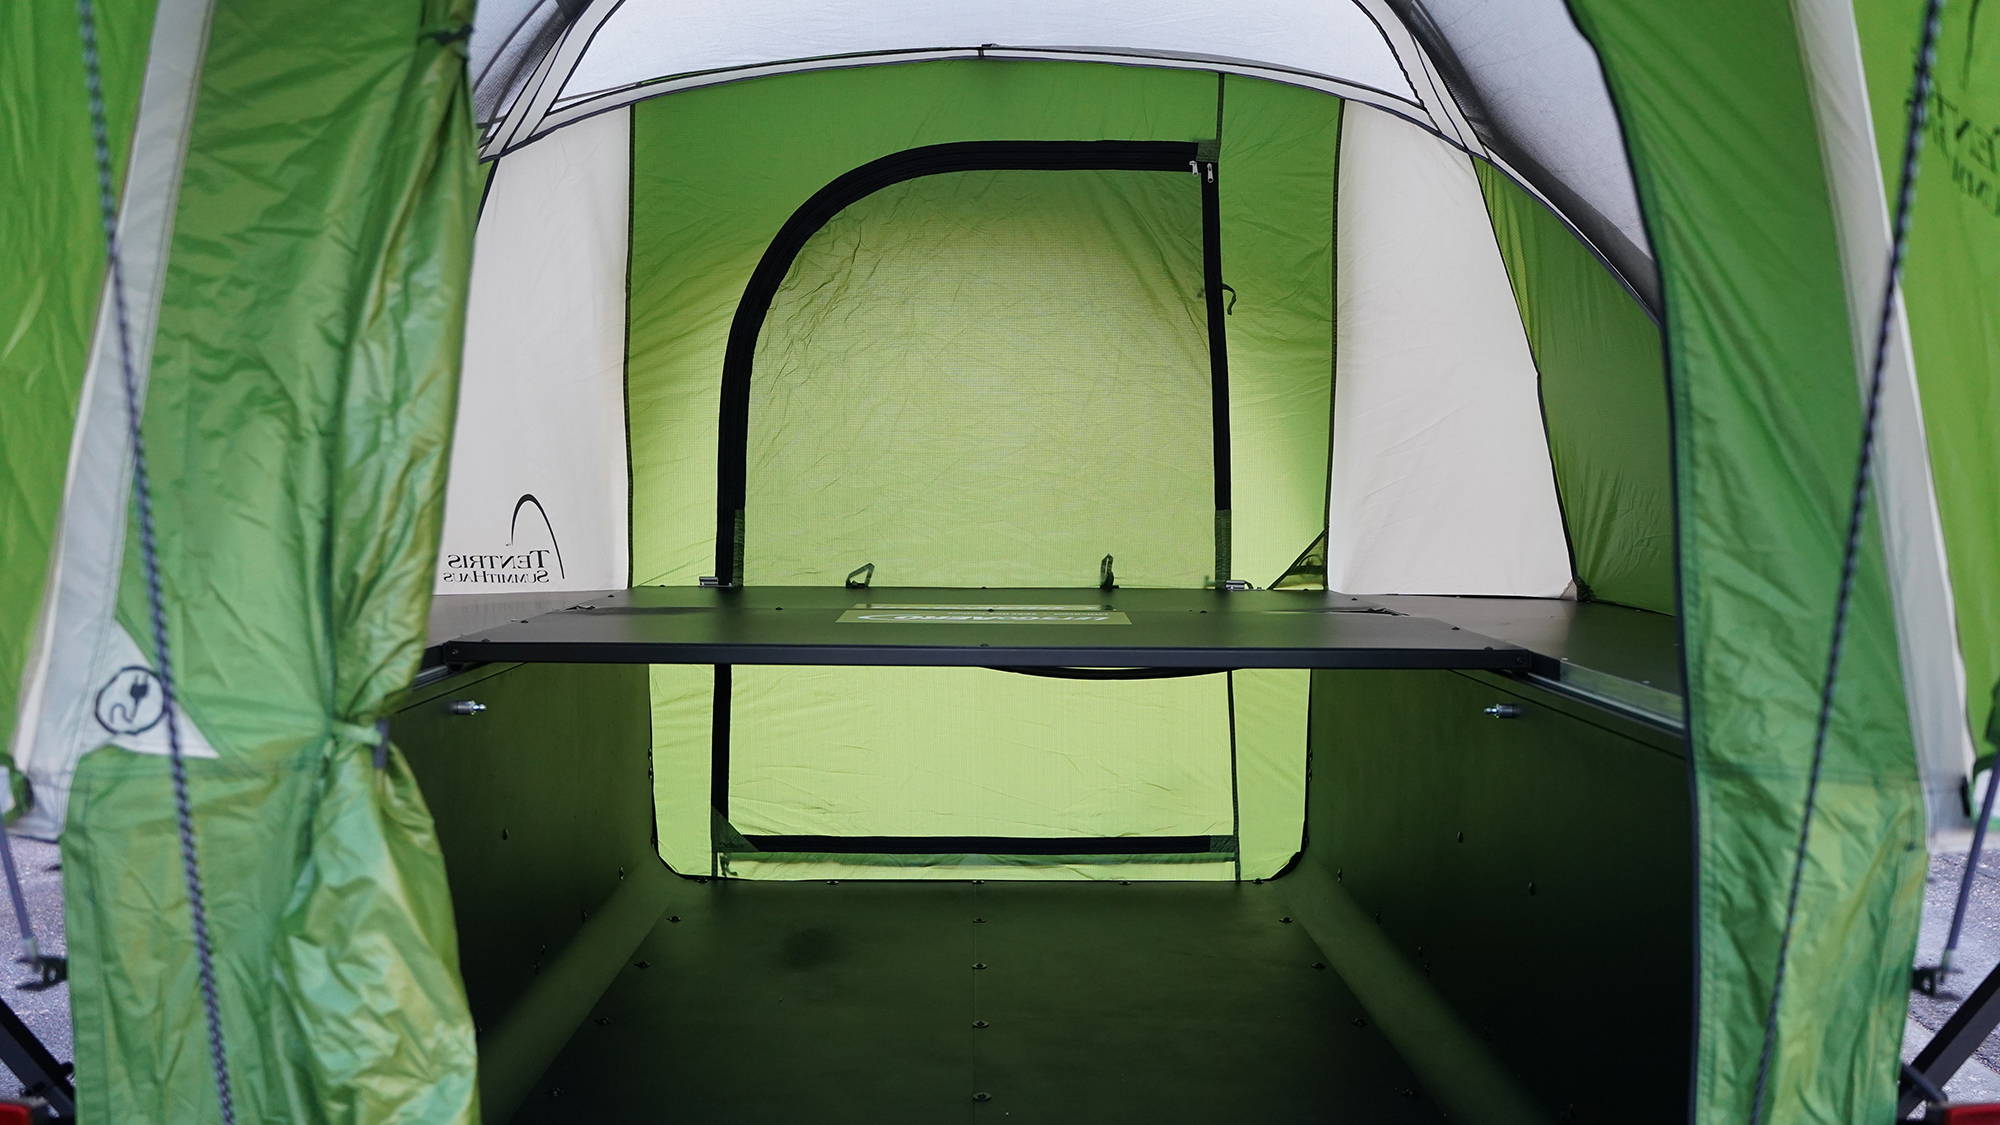 Camping Tent for Adventure Trailer Interior